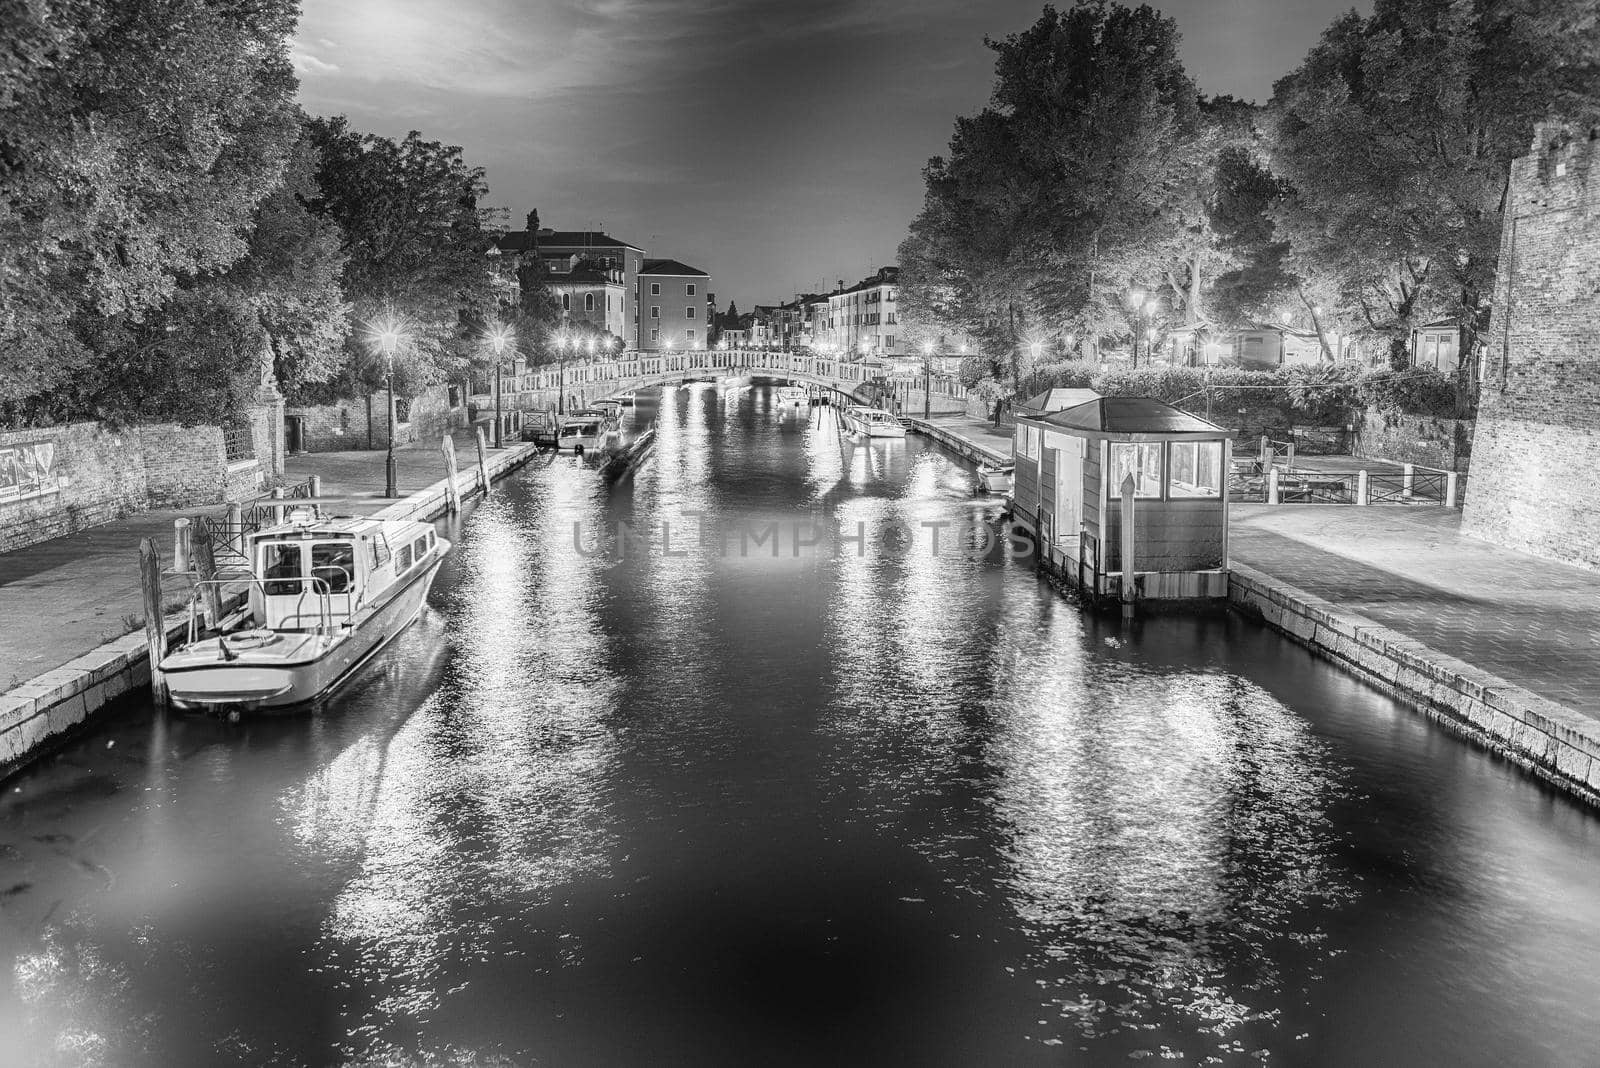 View over the scenic canal Rio Marin, Venice, Italy by marcorubino